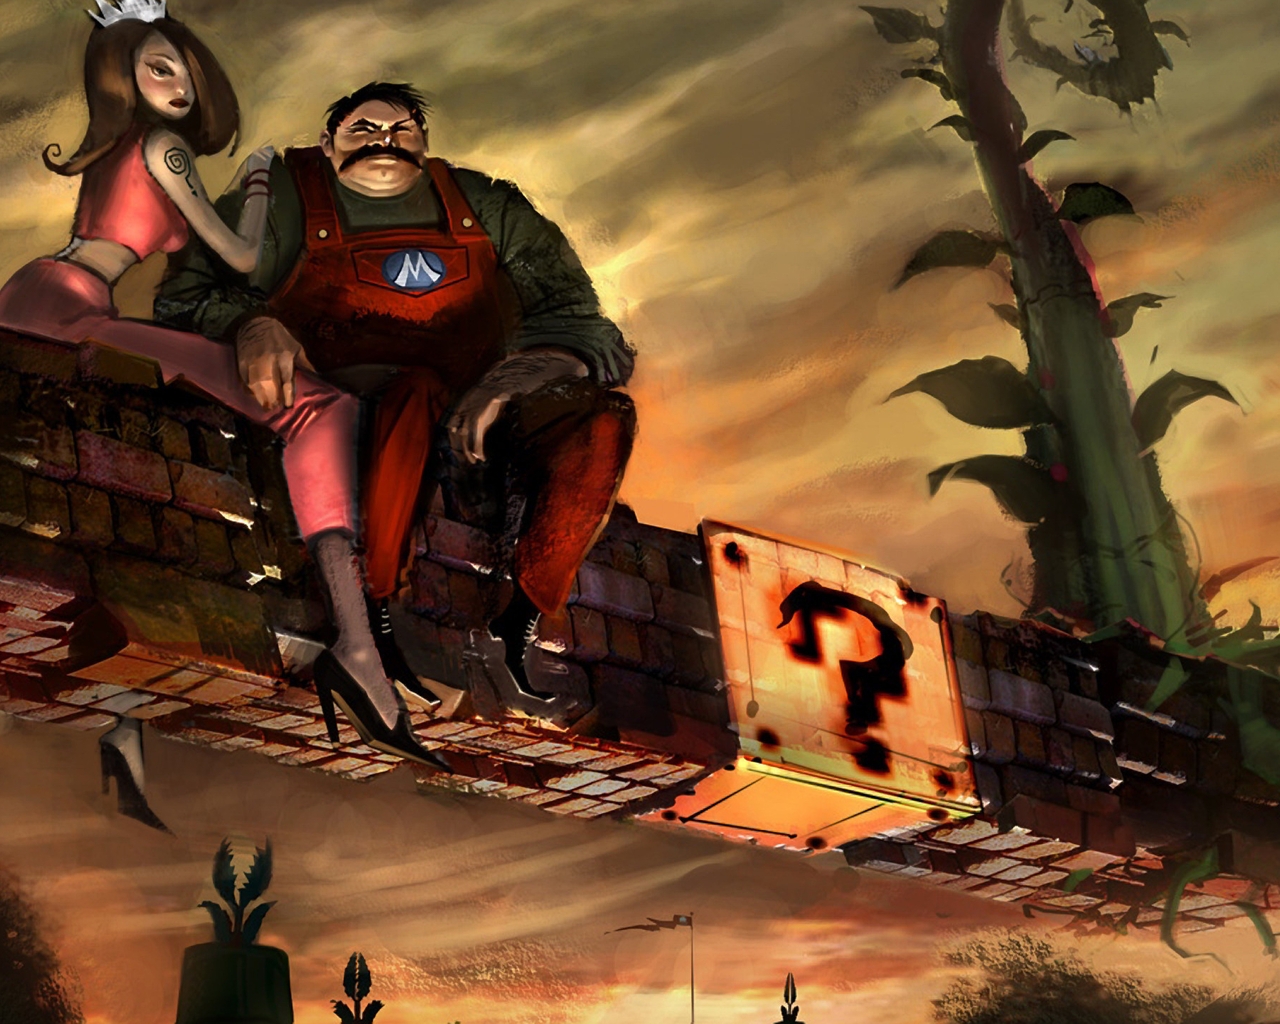 Image: Mario, Princess, mustache, bricks, hanging, plant, sky, art, play, sign, question